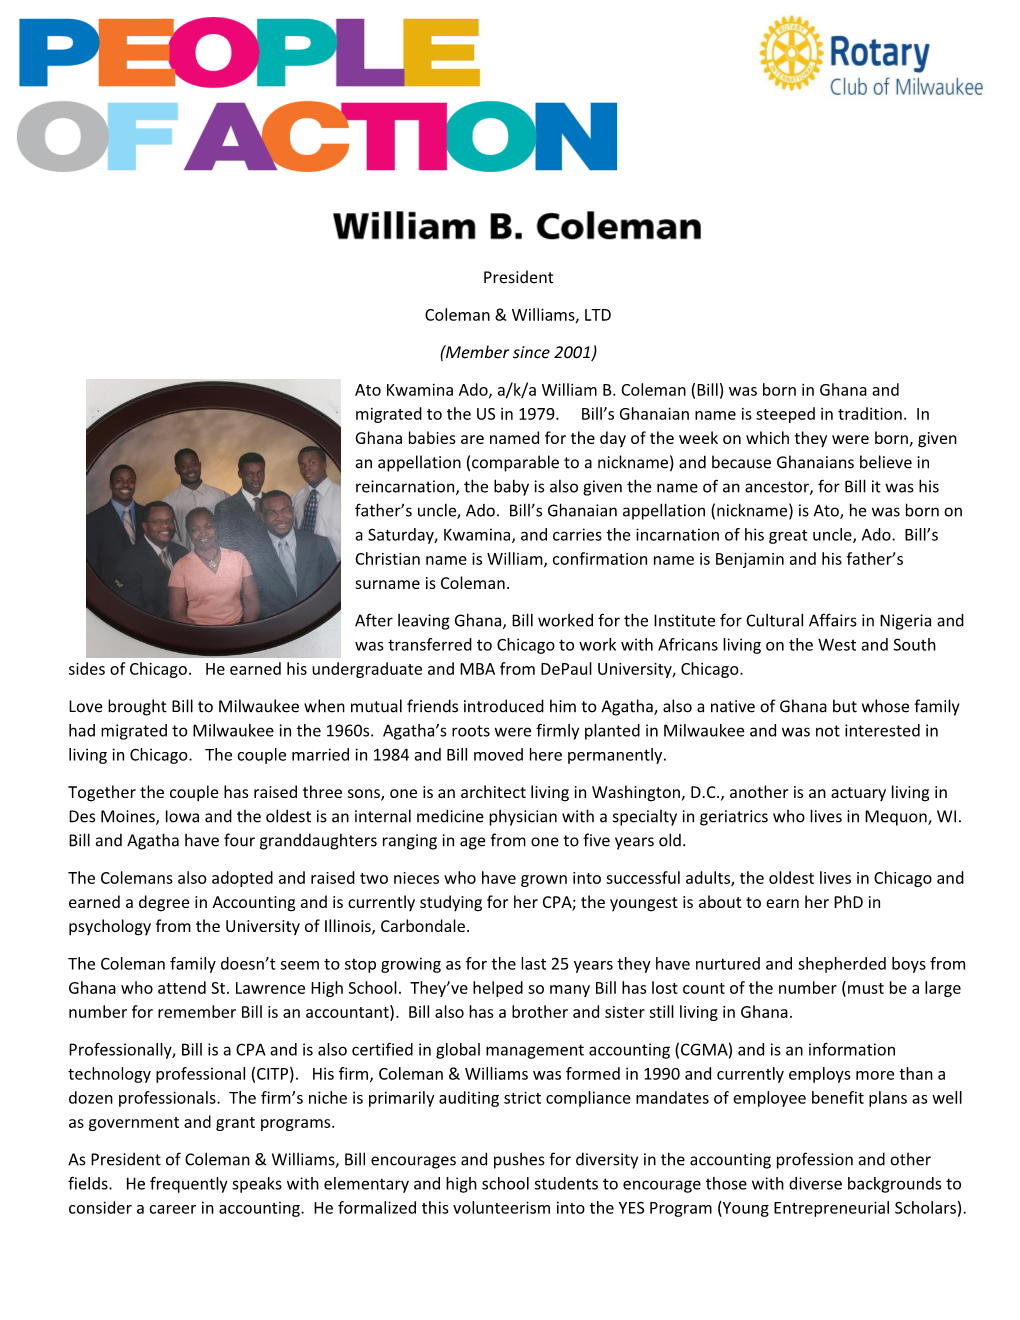 President Coleman & Williams